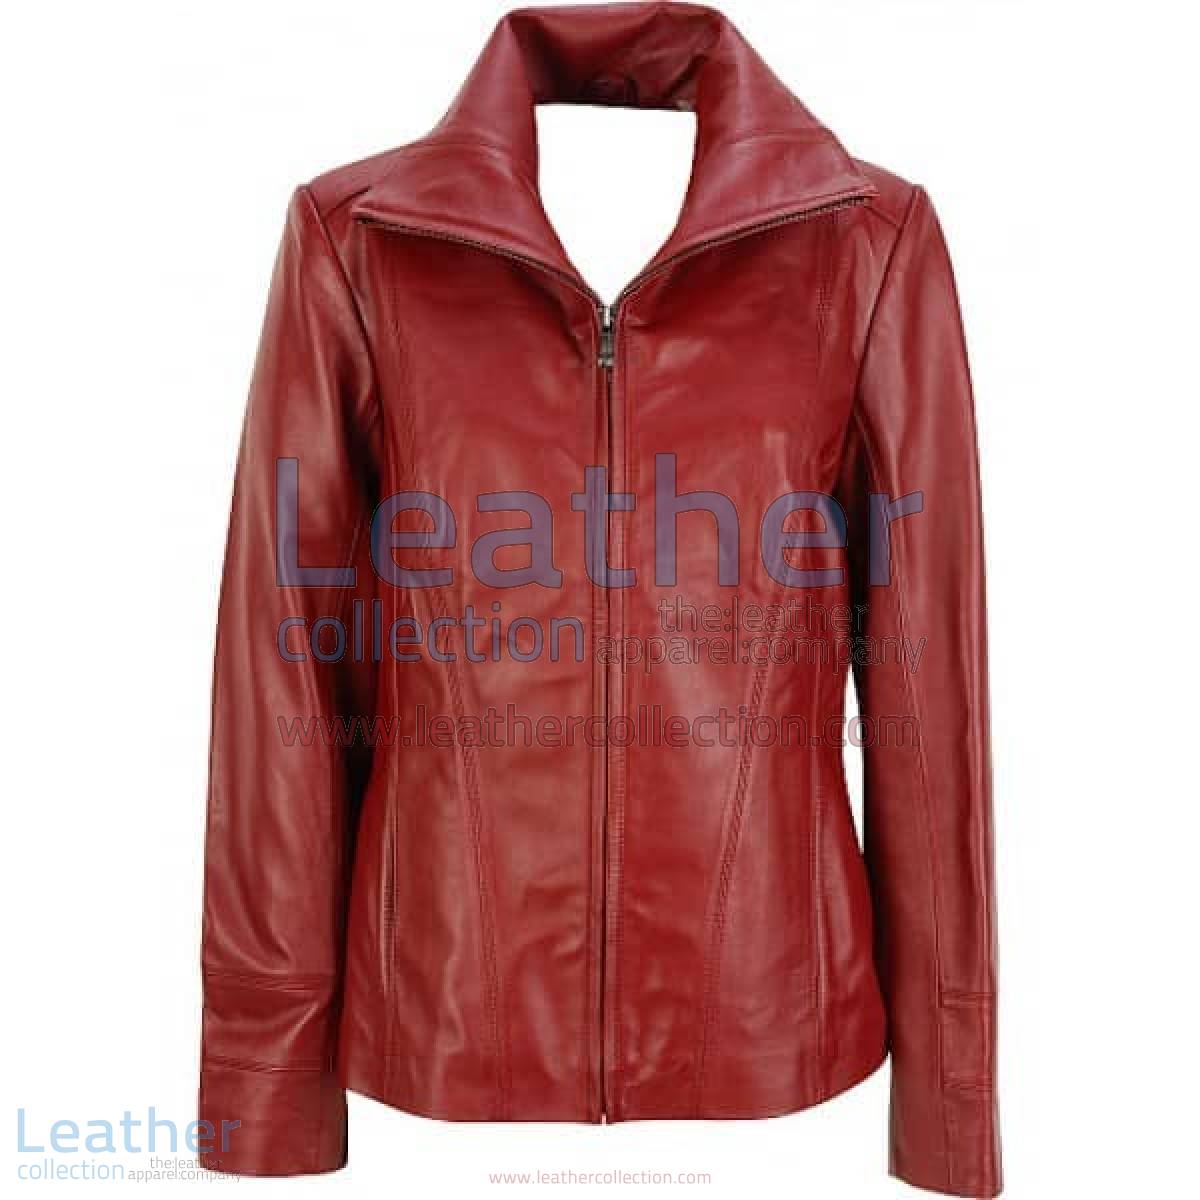 Dark Red Leather Fashion Jacket